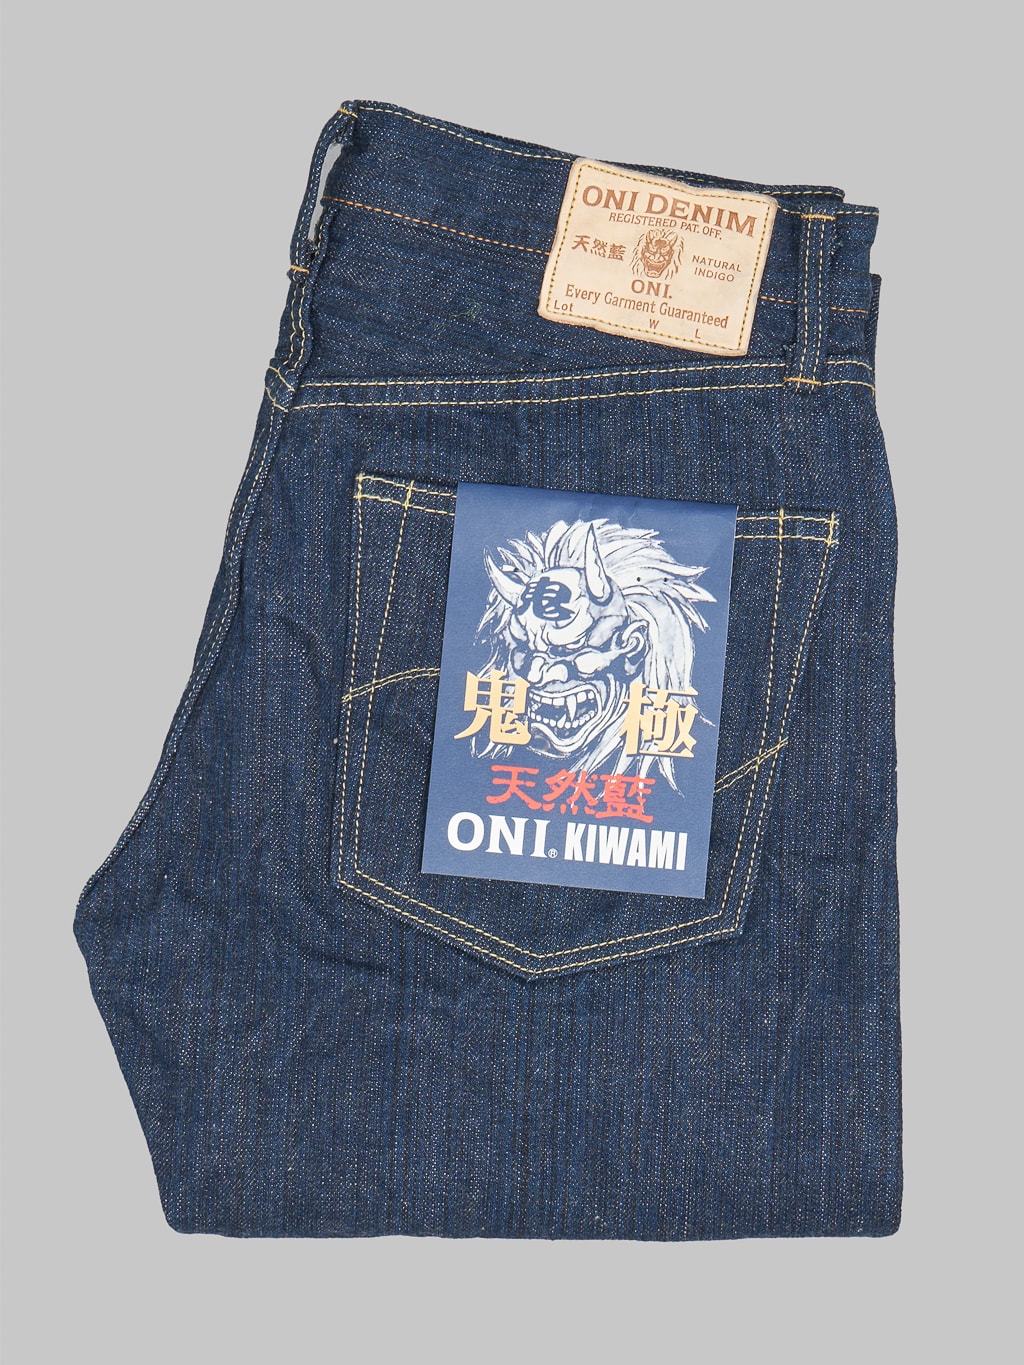 Oni denim kiwami indigo regular selvedge jeans japan made